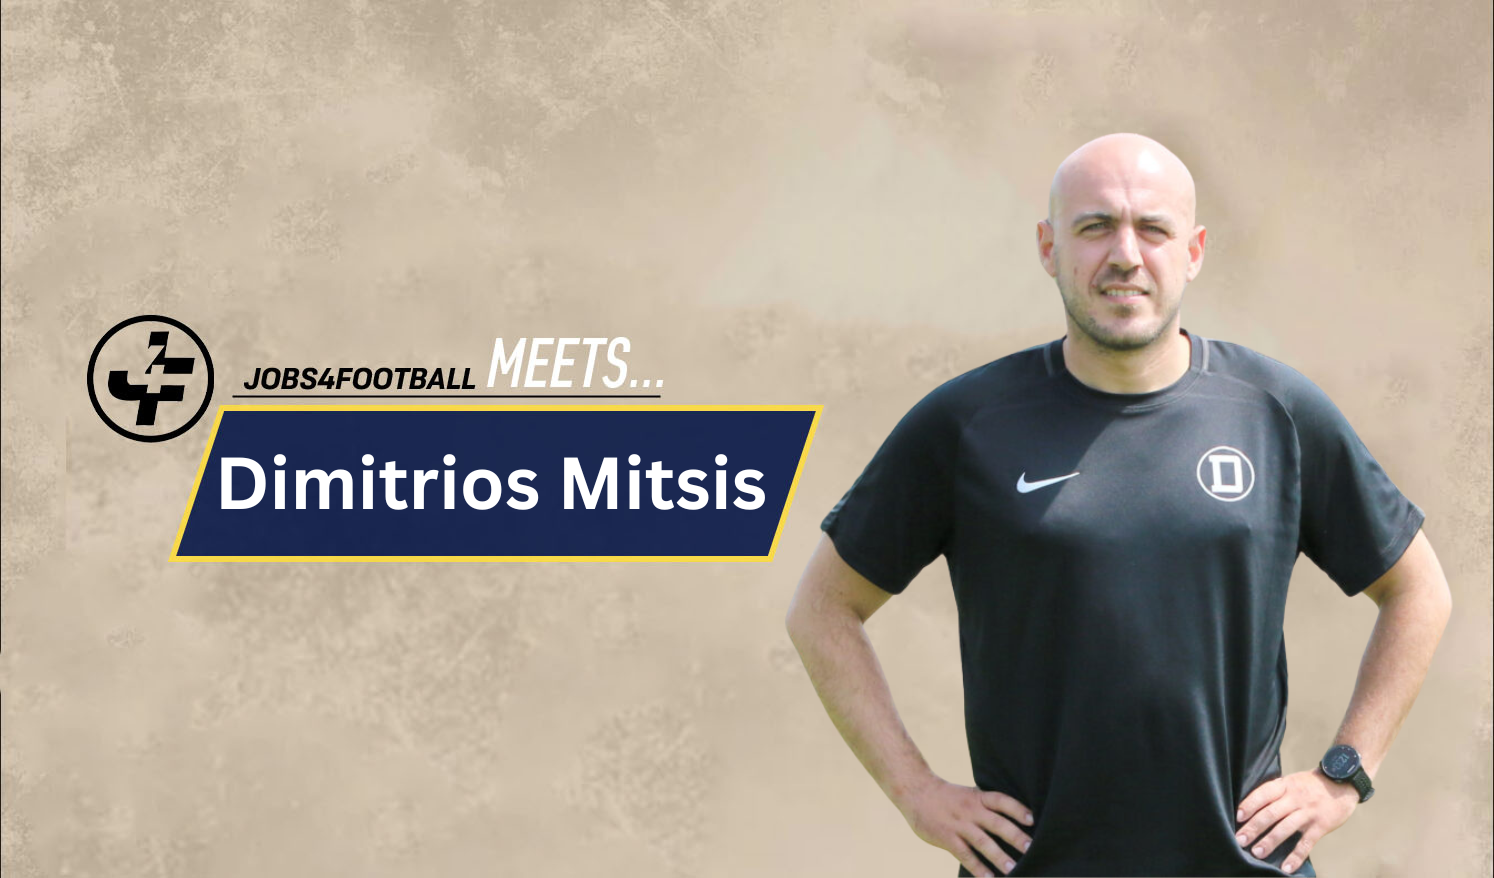 Dimitrios Mitsis